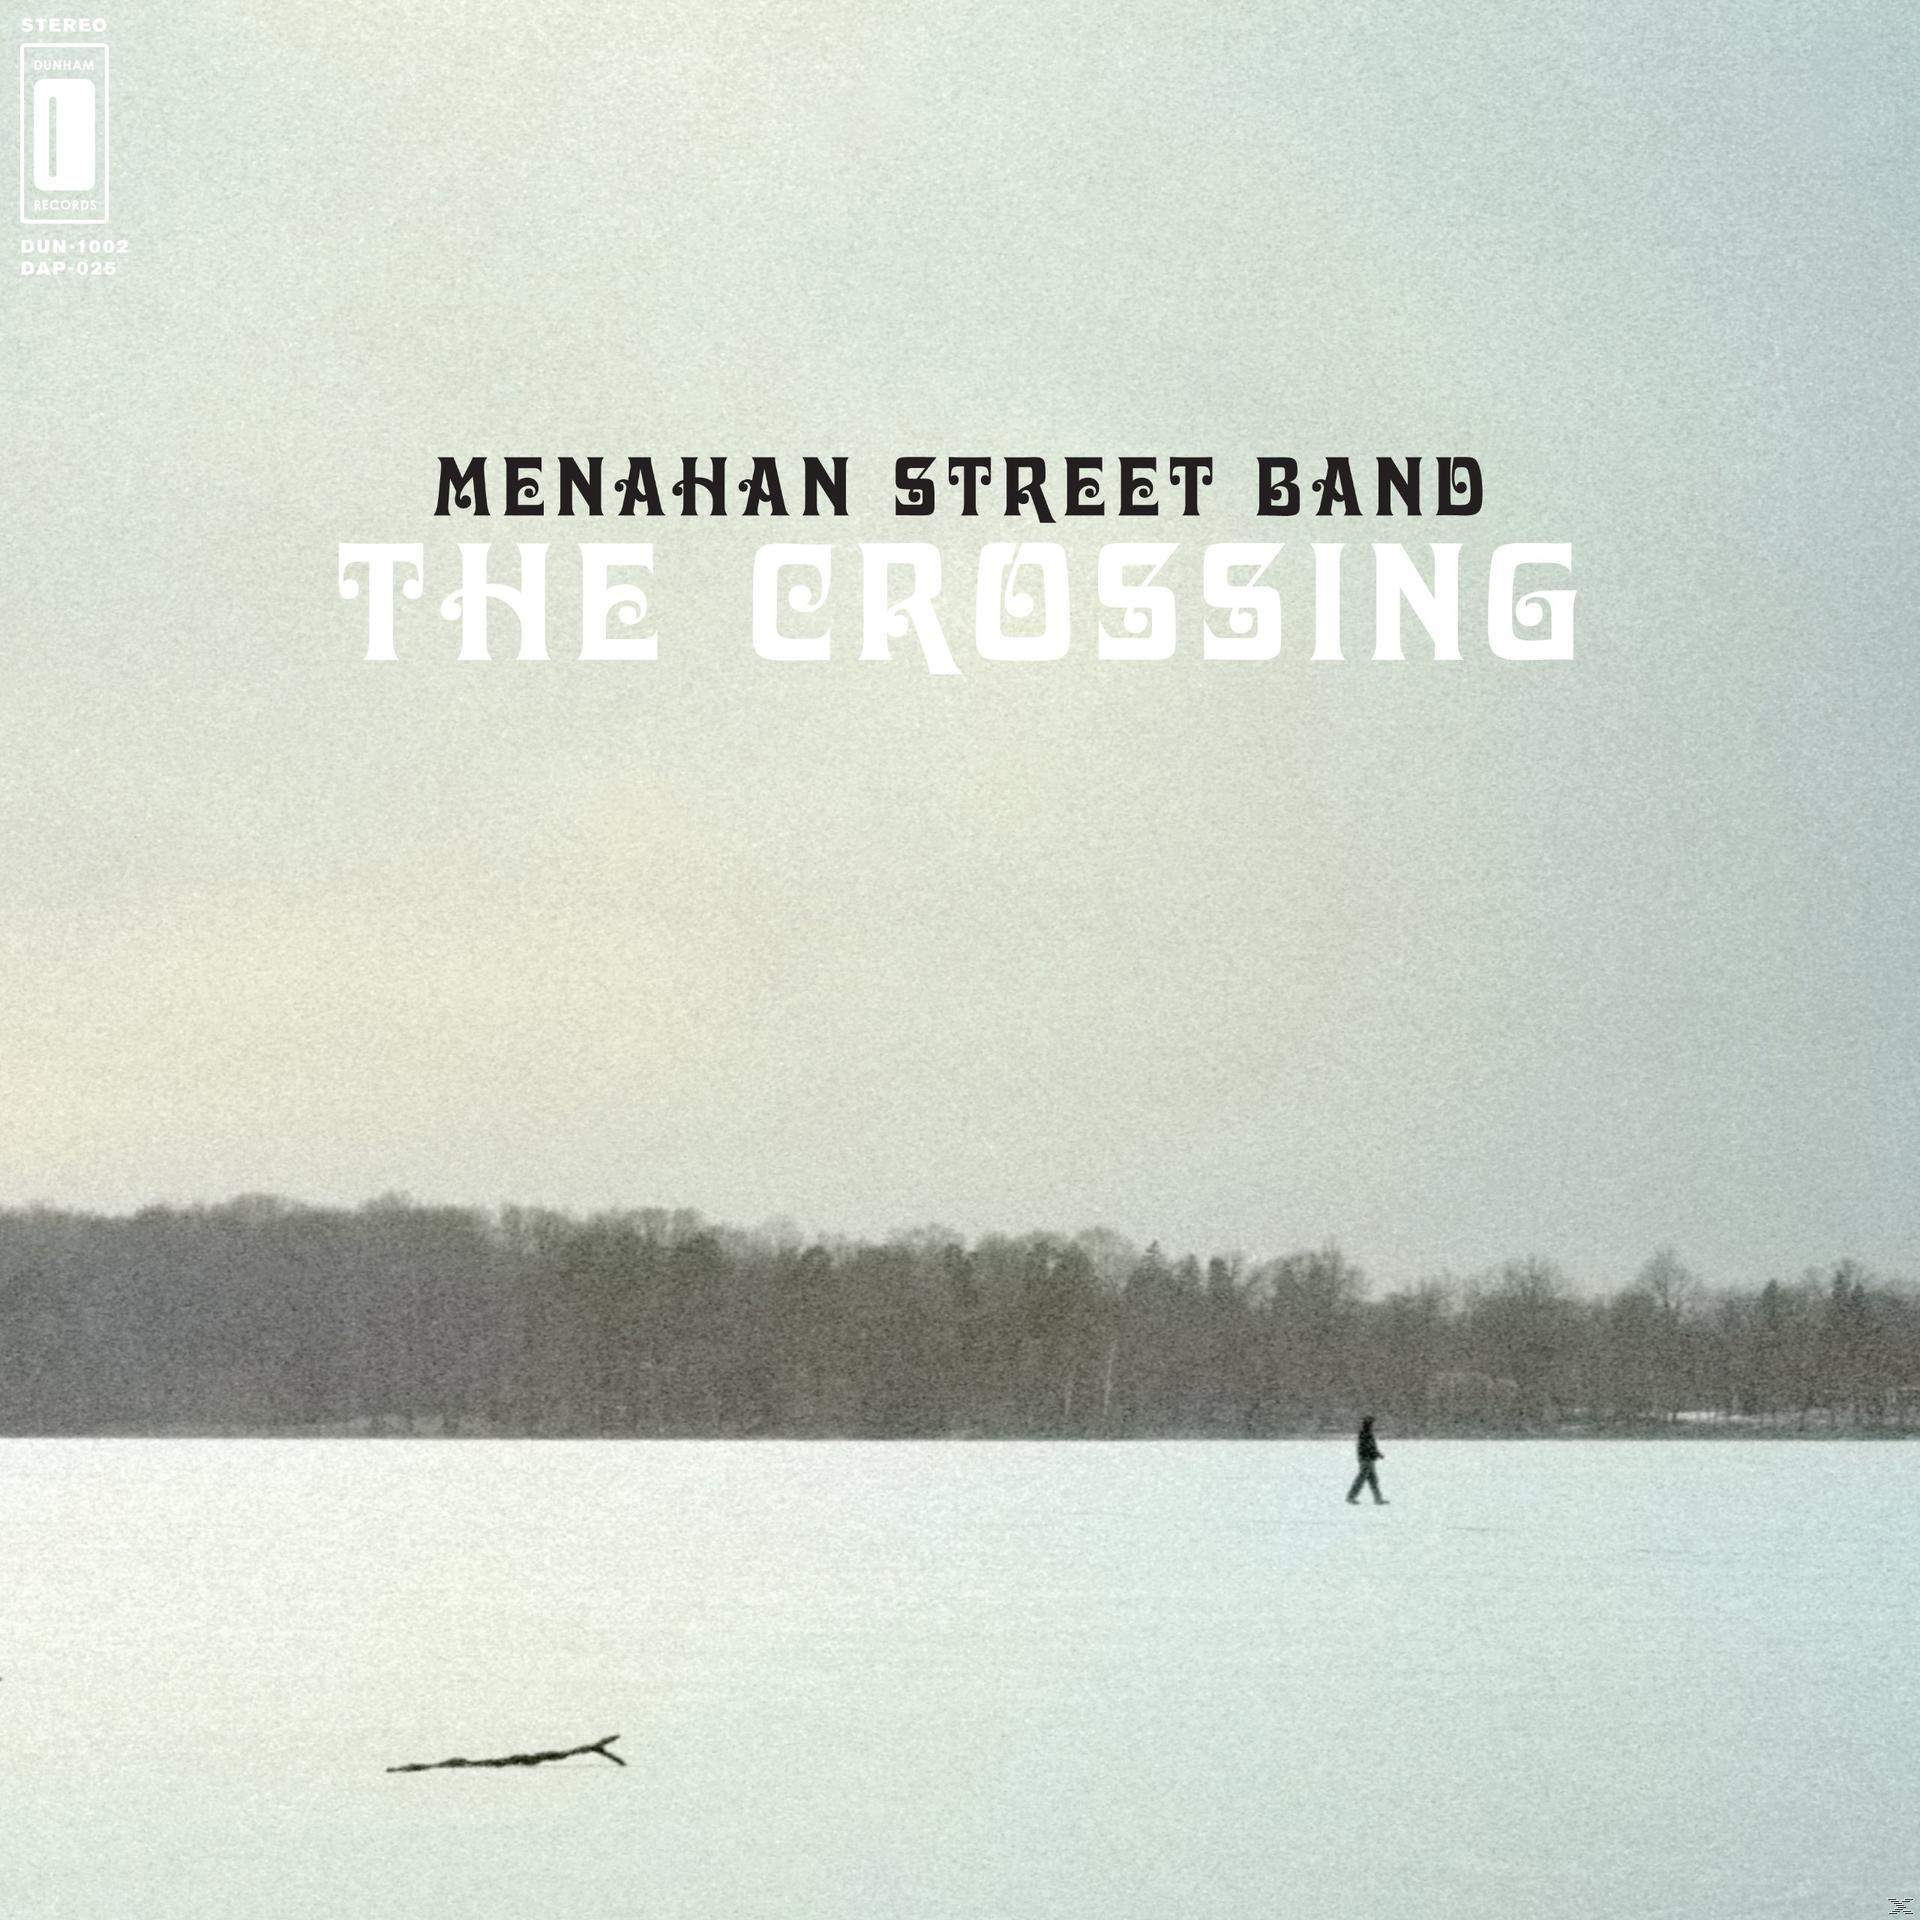 Street + - (LP The - Download) Crossing Menahan Band